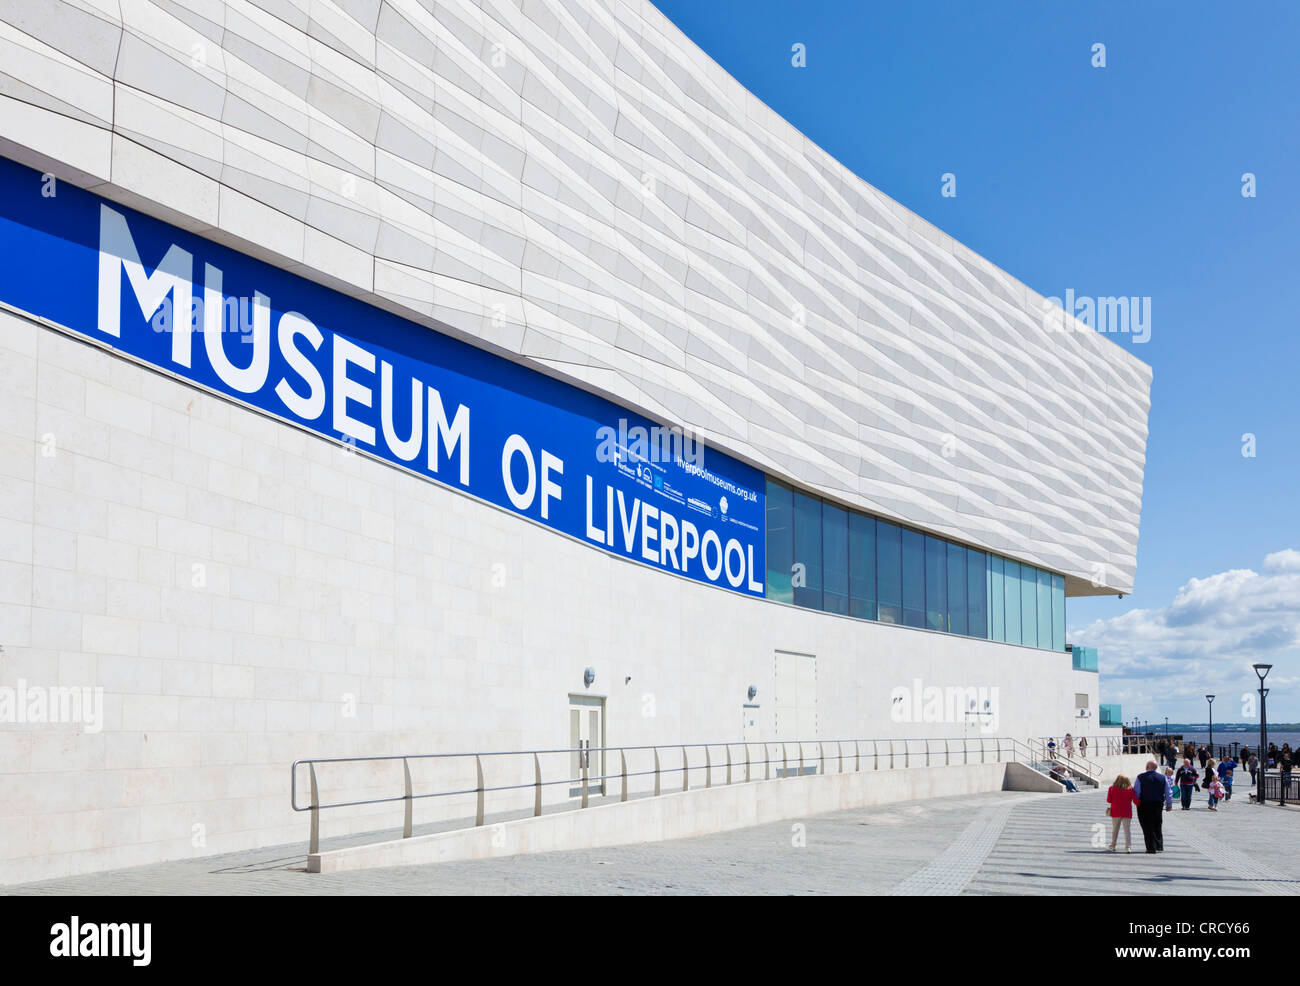 Museum of Liverpool on Mann Island Pier Head Liverpool Merseyside England UK GB EU Europe Stock Photo